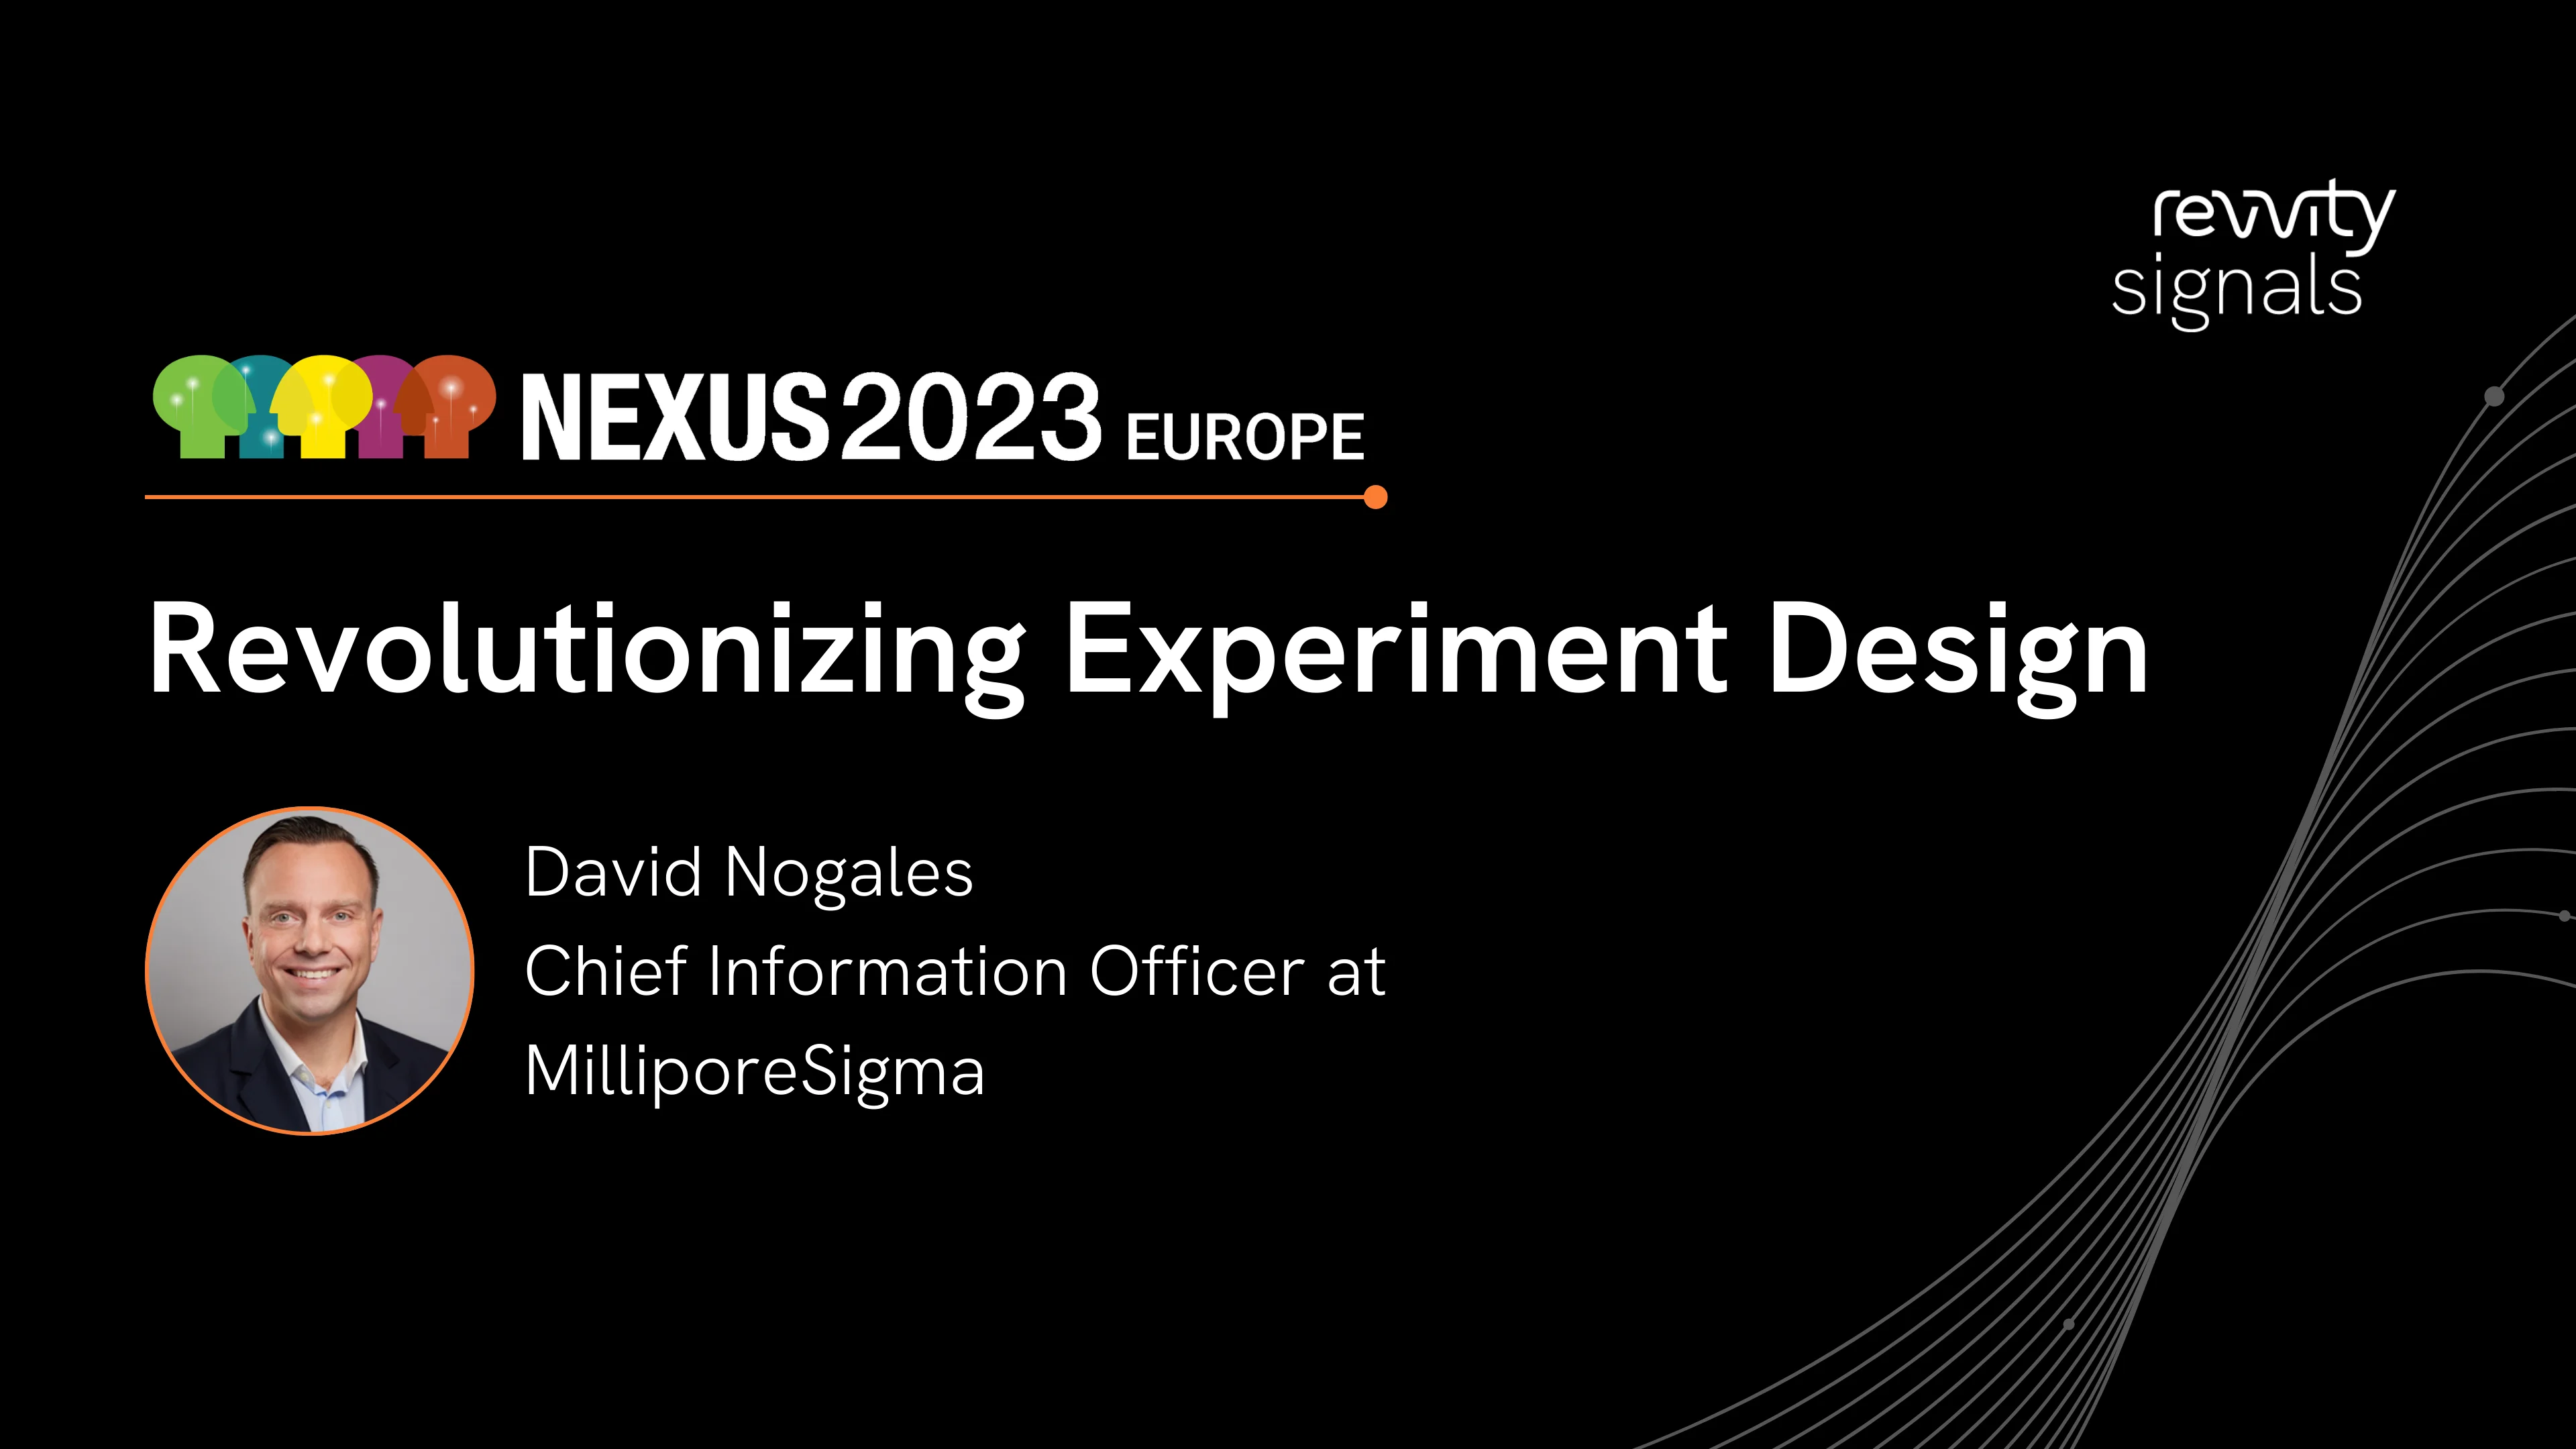 Watch Day 1, EU NEXUS 2023 - Revolutionizing Experiment Design on Vimeo.